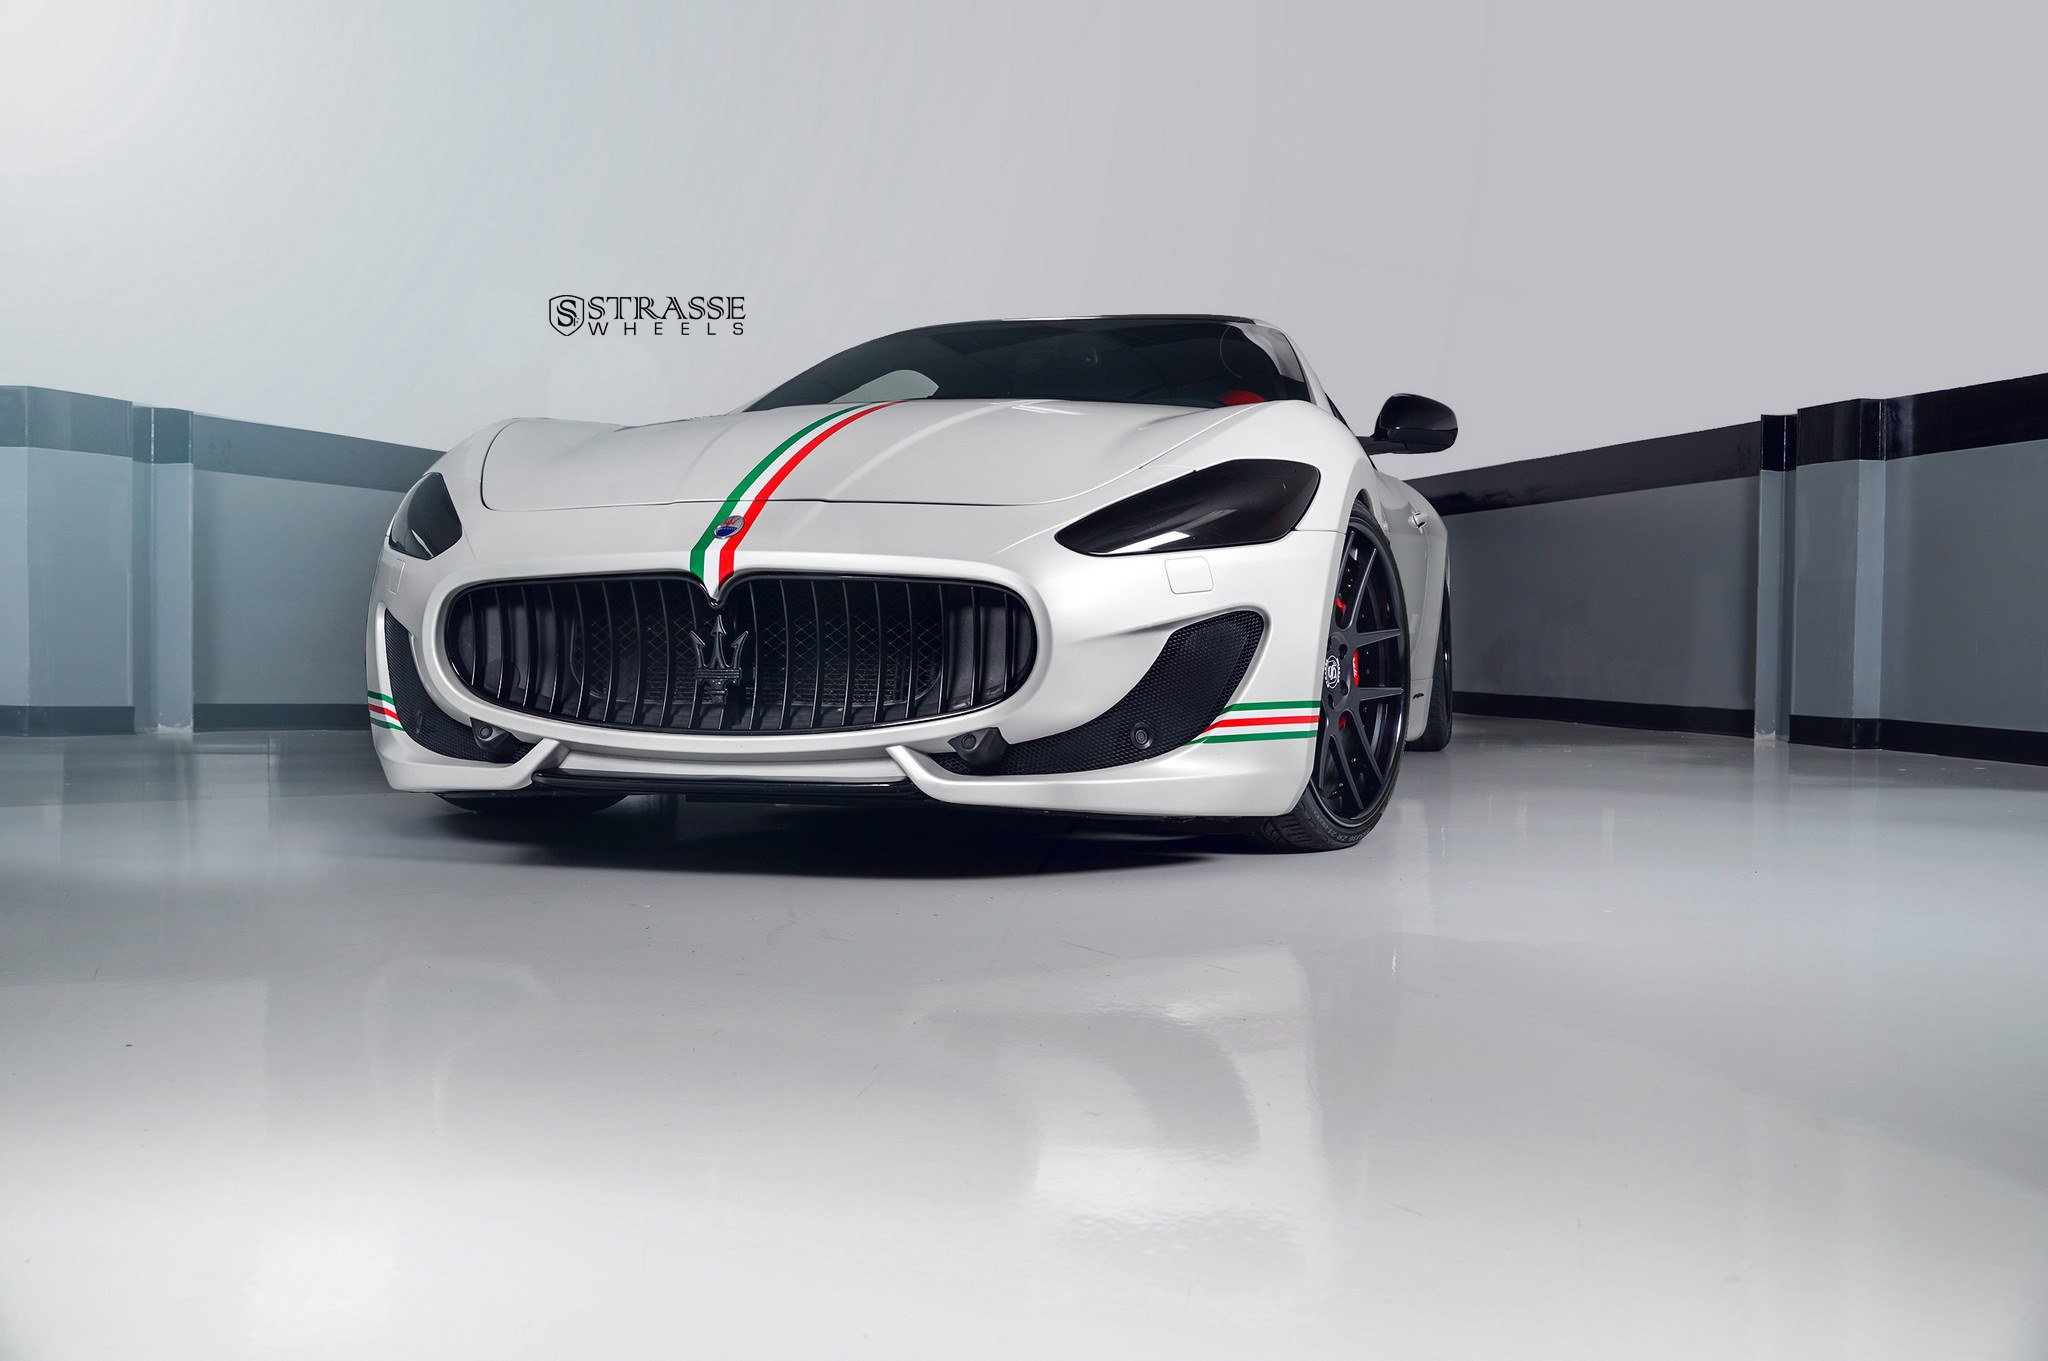 white, Maserati, Gran, Turismo, Strasse, Wheels, Cars Wallpaper